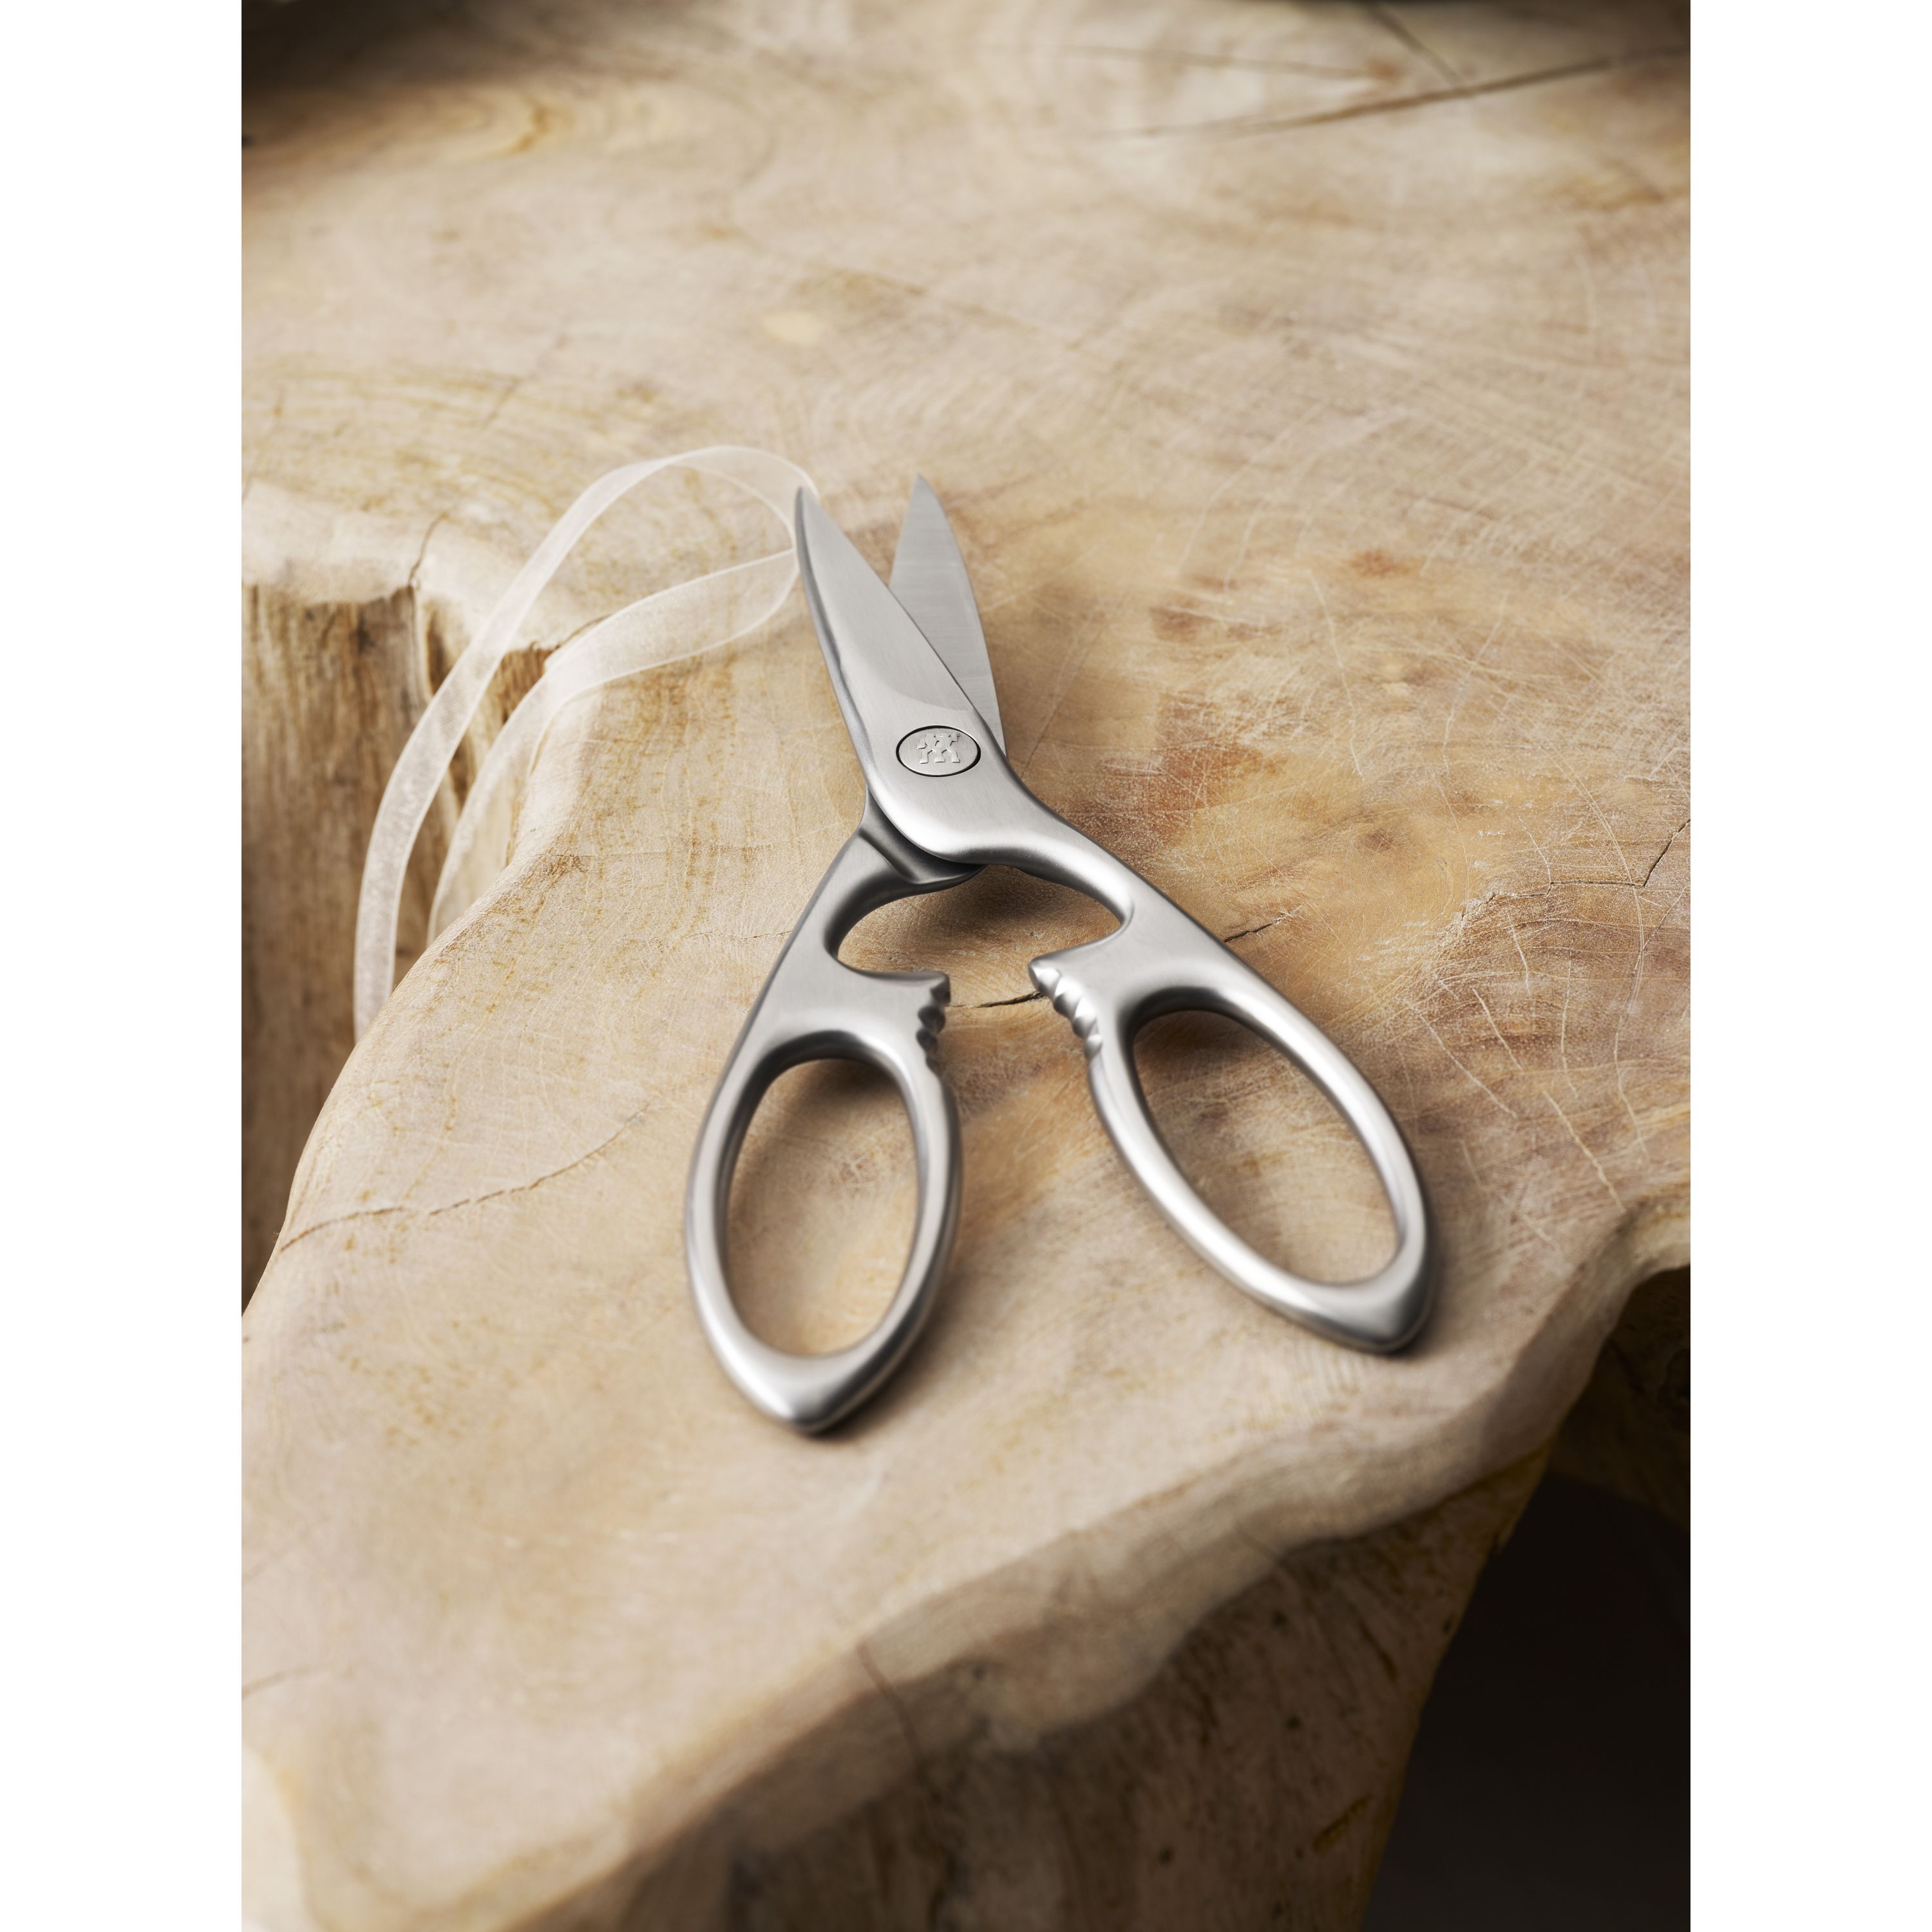  Zwilling Twin Select Kitchen Shears, Multi-Purpose, Bottle  Opener, Dishwasher Safe, Heavy Duty, Stainless Steel: Kitchen Scissors:  Home & Kitchen